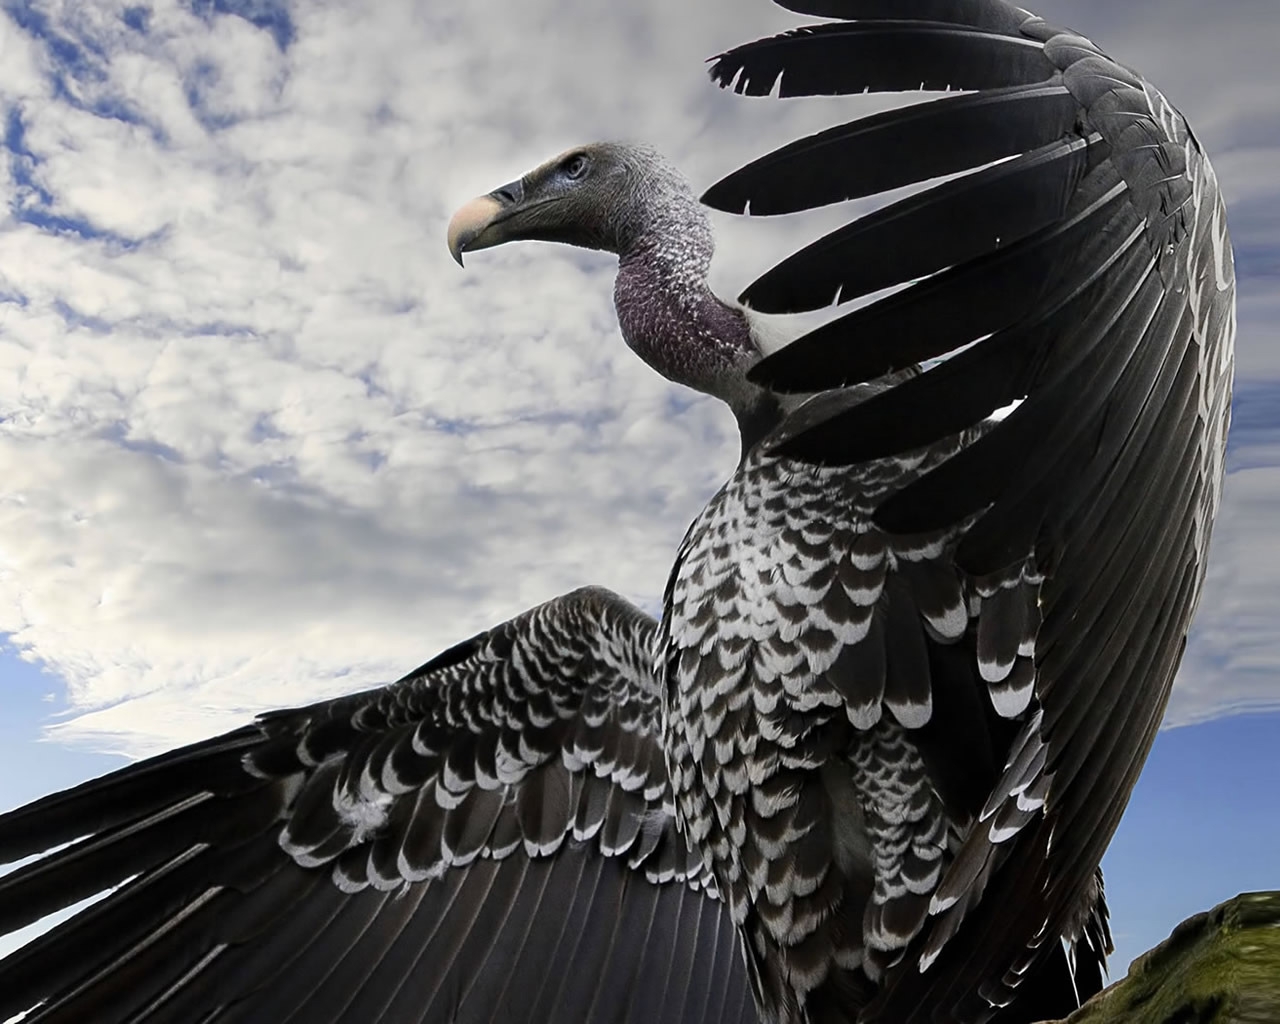 Breathtaking Condor for 1280 x 1024 resolution